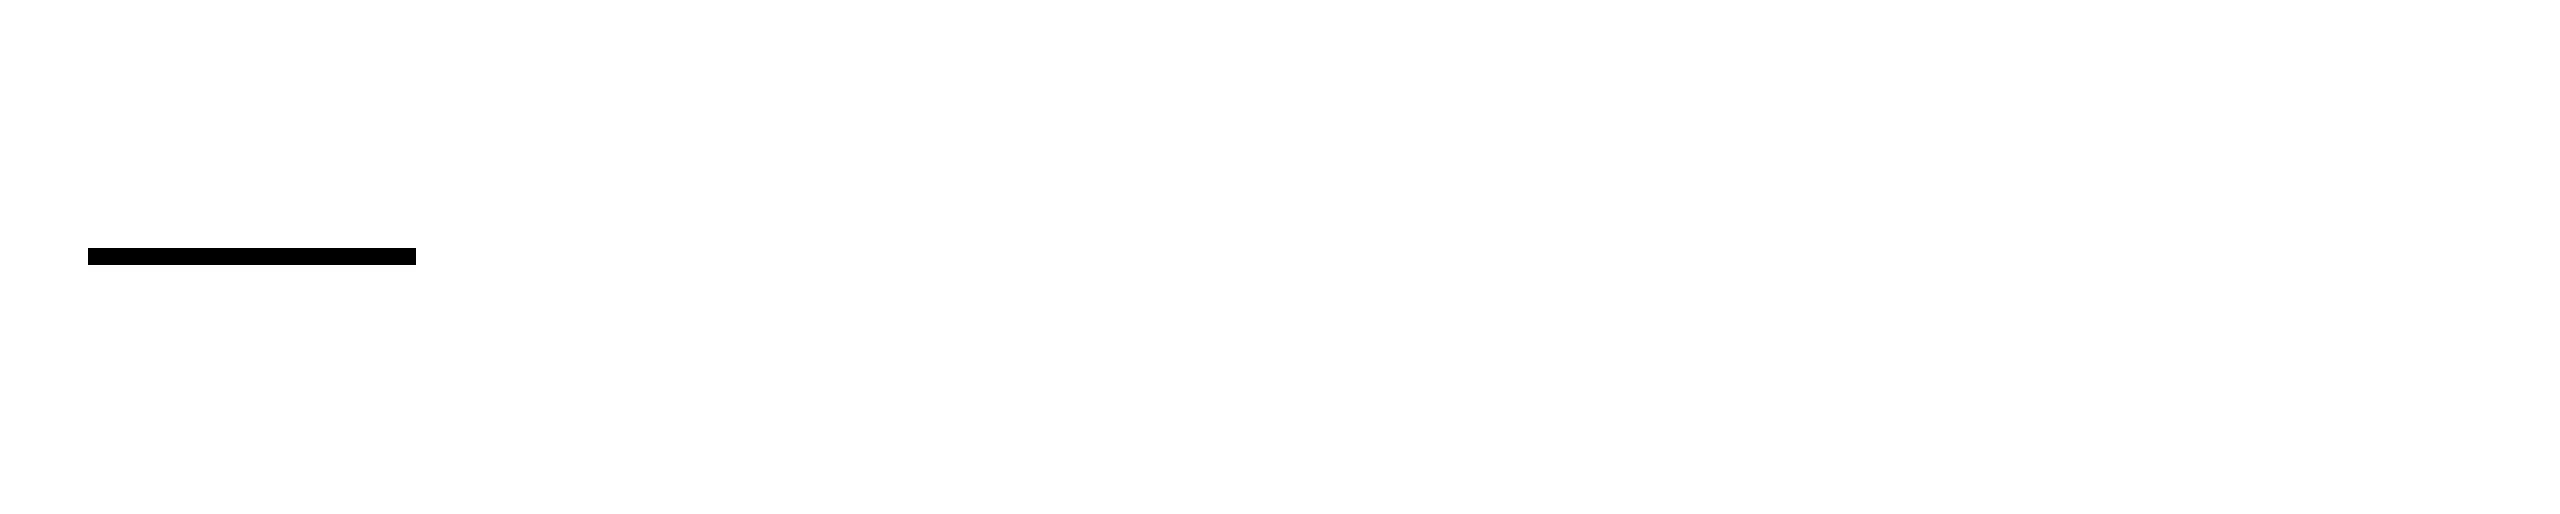 logo société générale